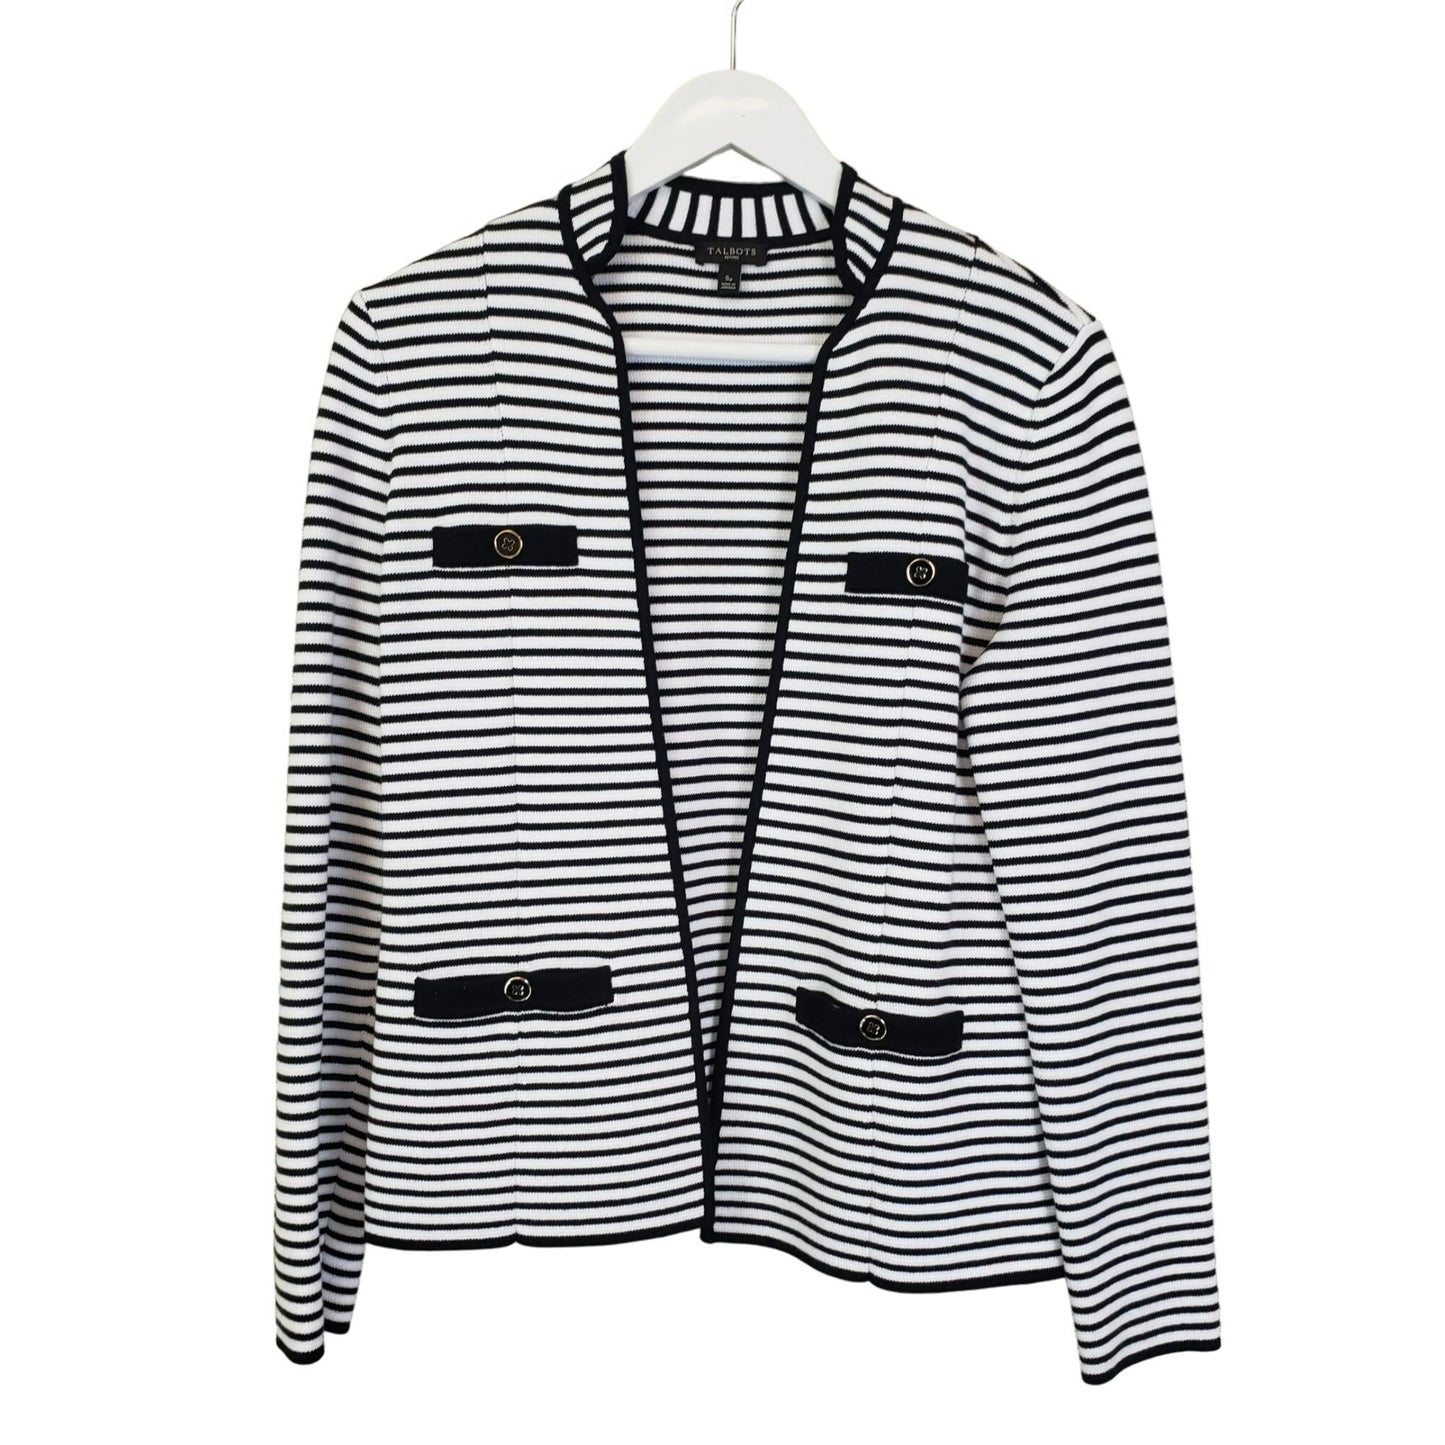 Talbots Striped Nautical Style Open Cardigan Sweater Size Small Petite